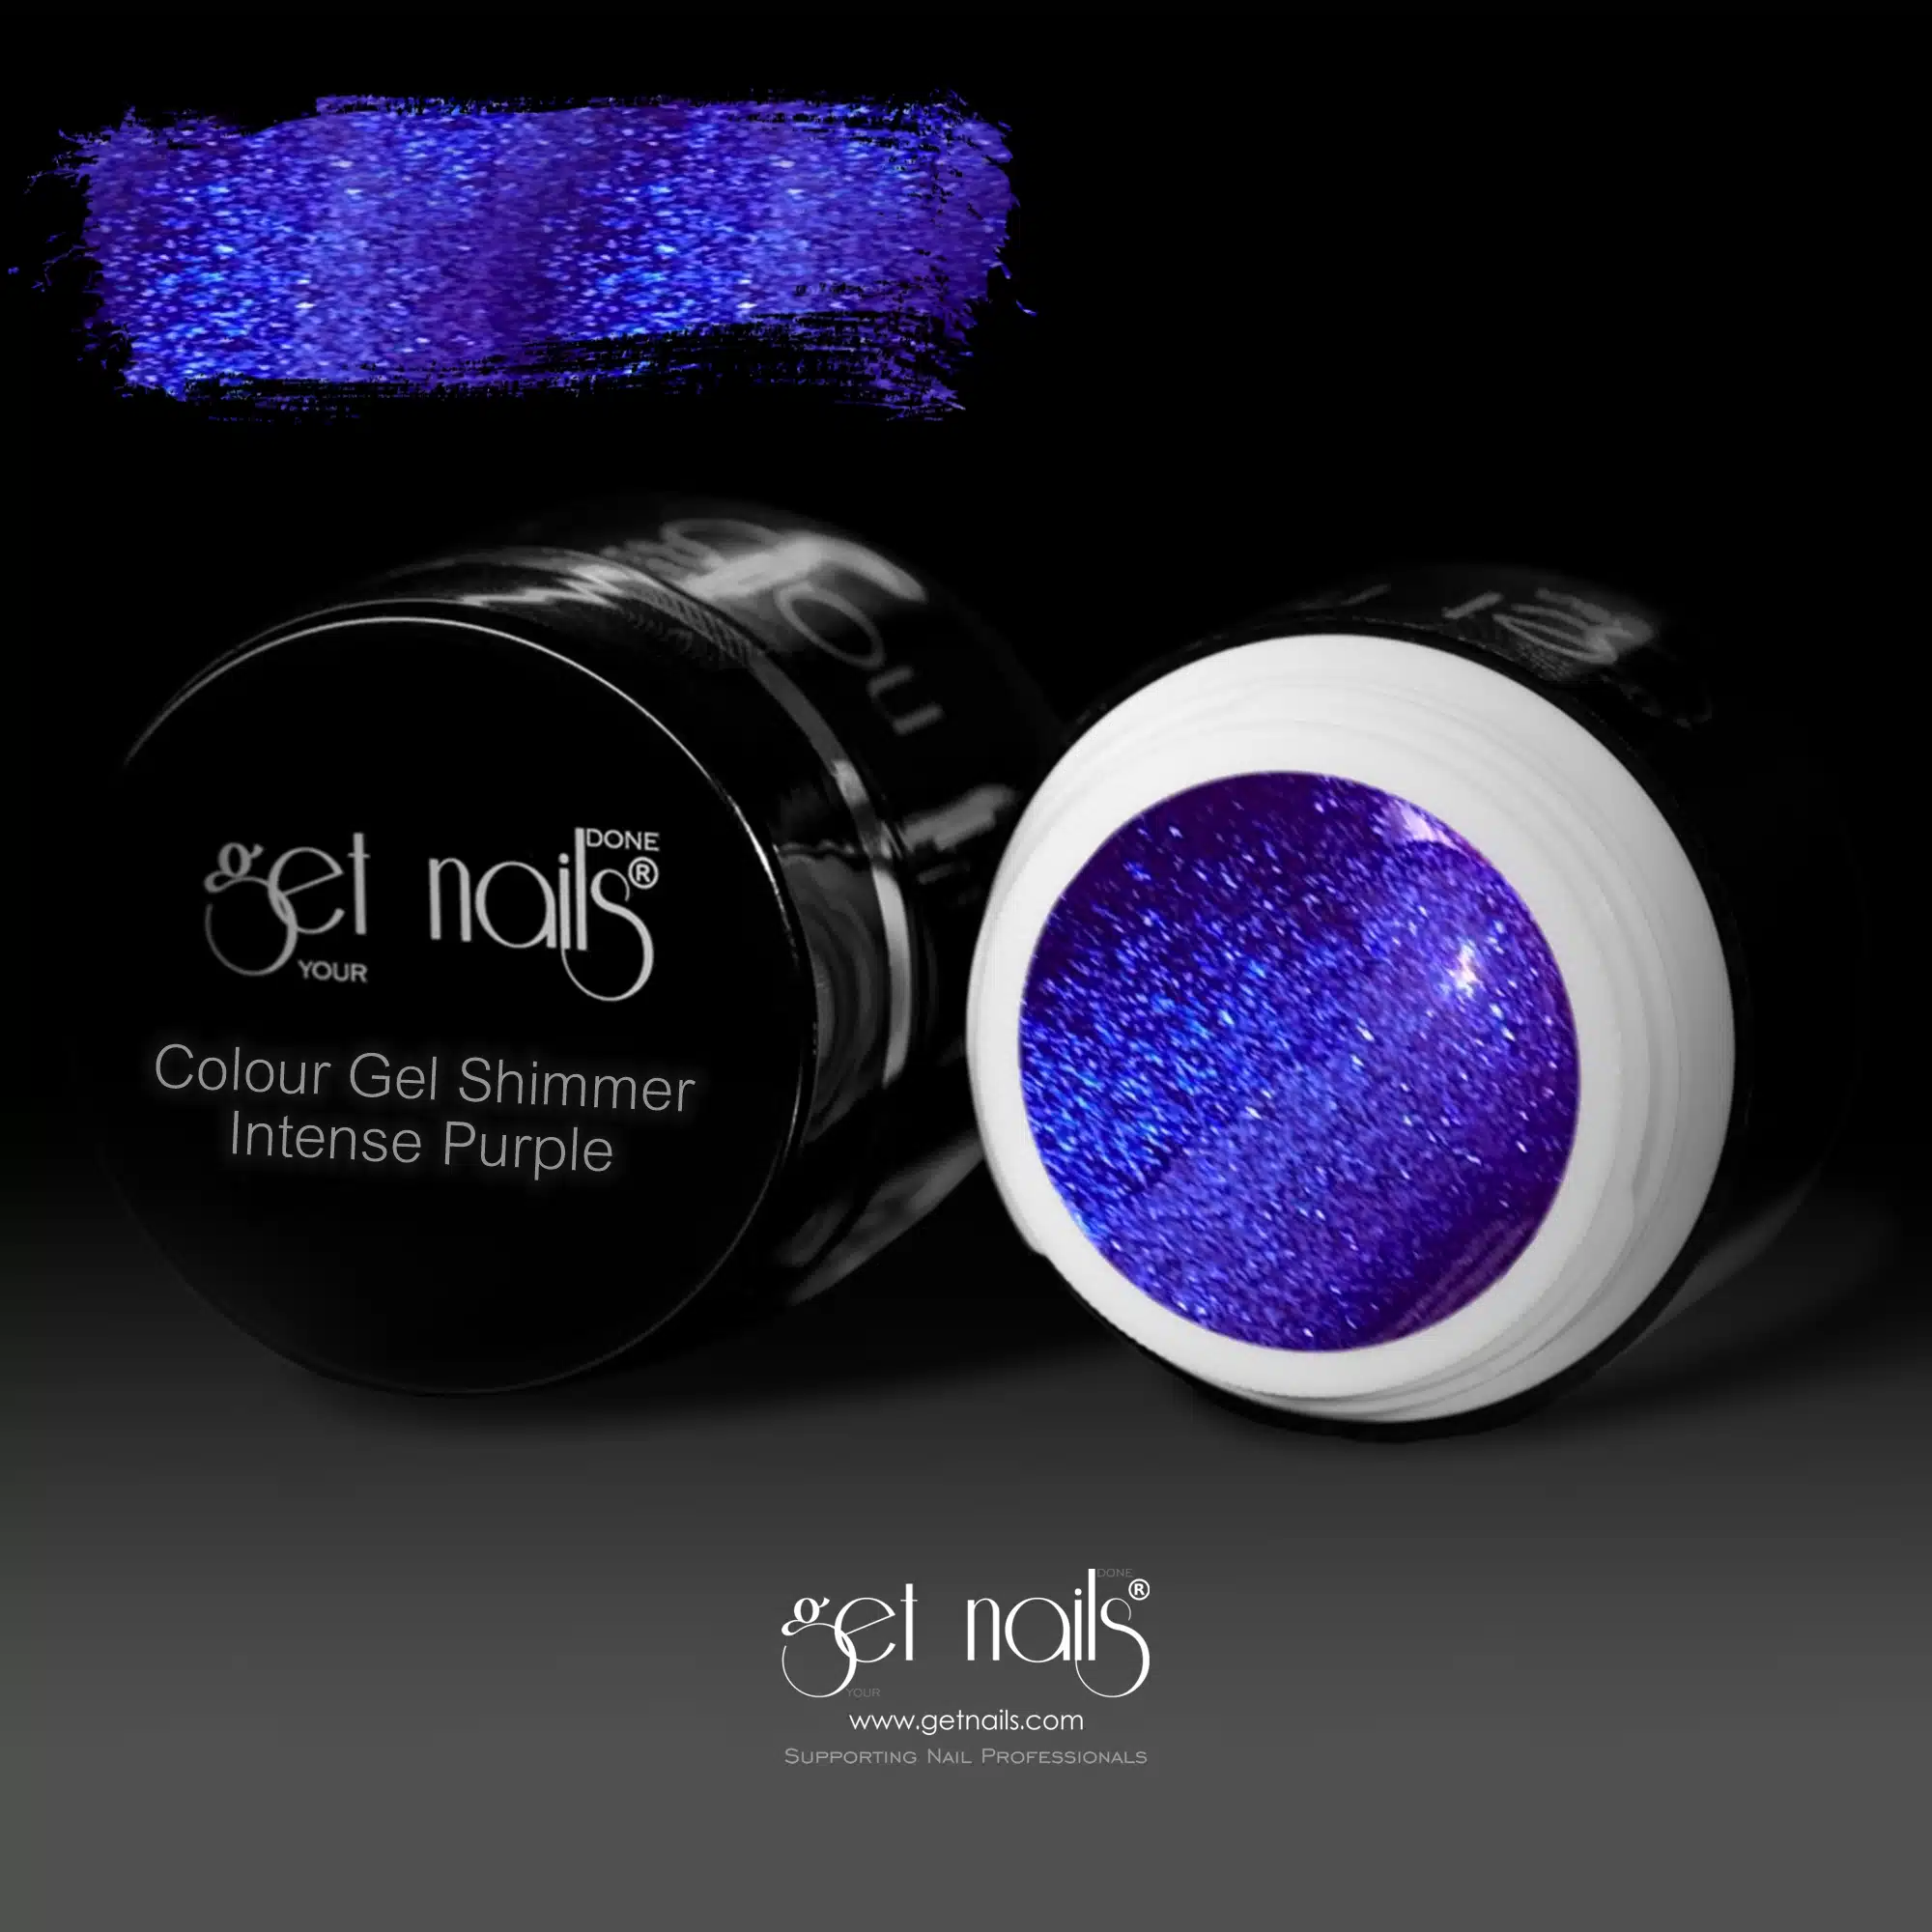 Get Nails Austria - Colour Gel Shimmer Intense Purple 5g